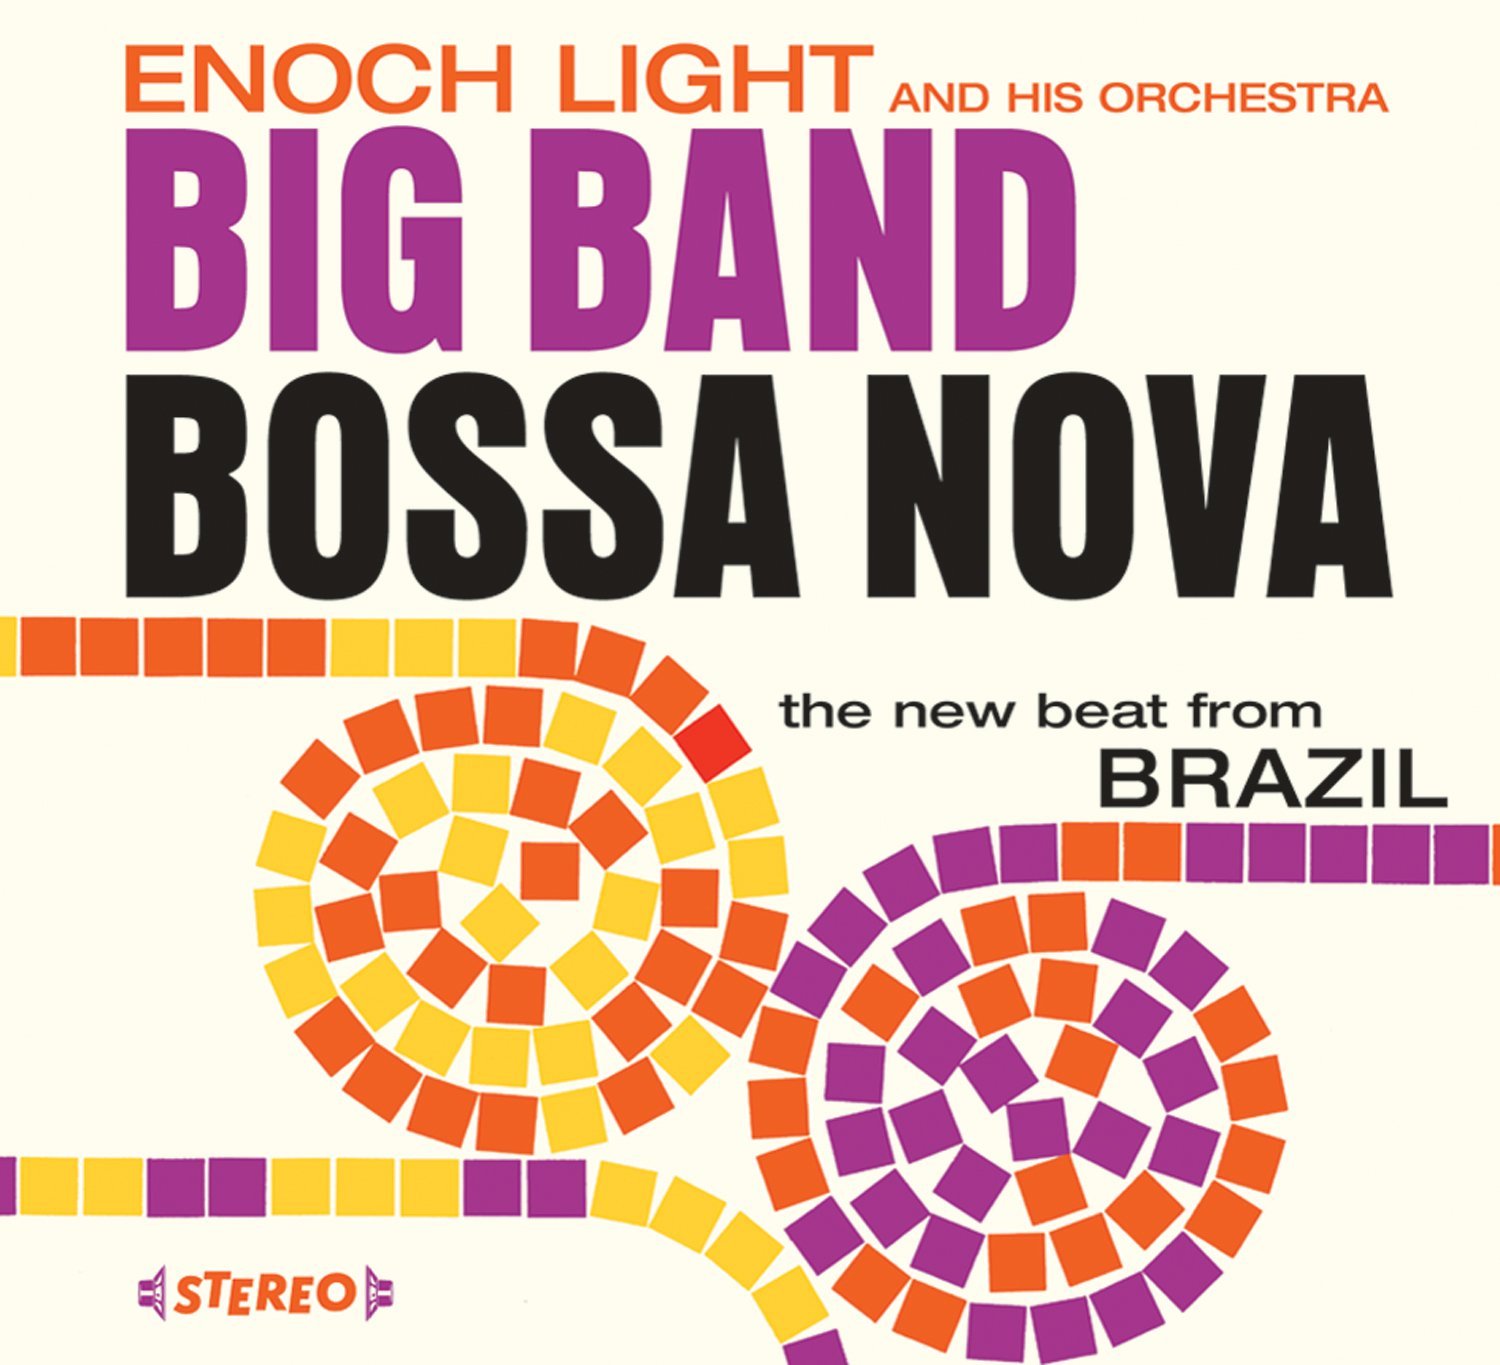 Stereo brazil. Big Band Bossa Nova. Enoch Light and his Orchestra. Dancing Bossa Nova. Big Band Bossa Nova Oscar.